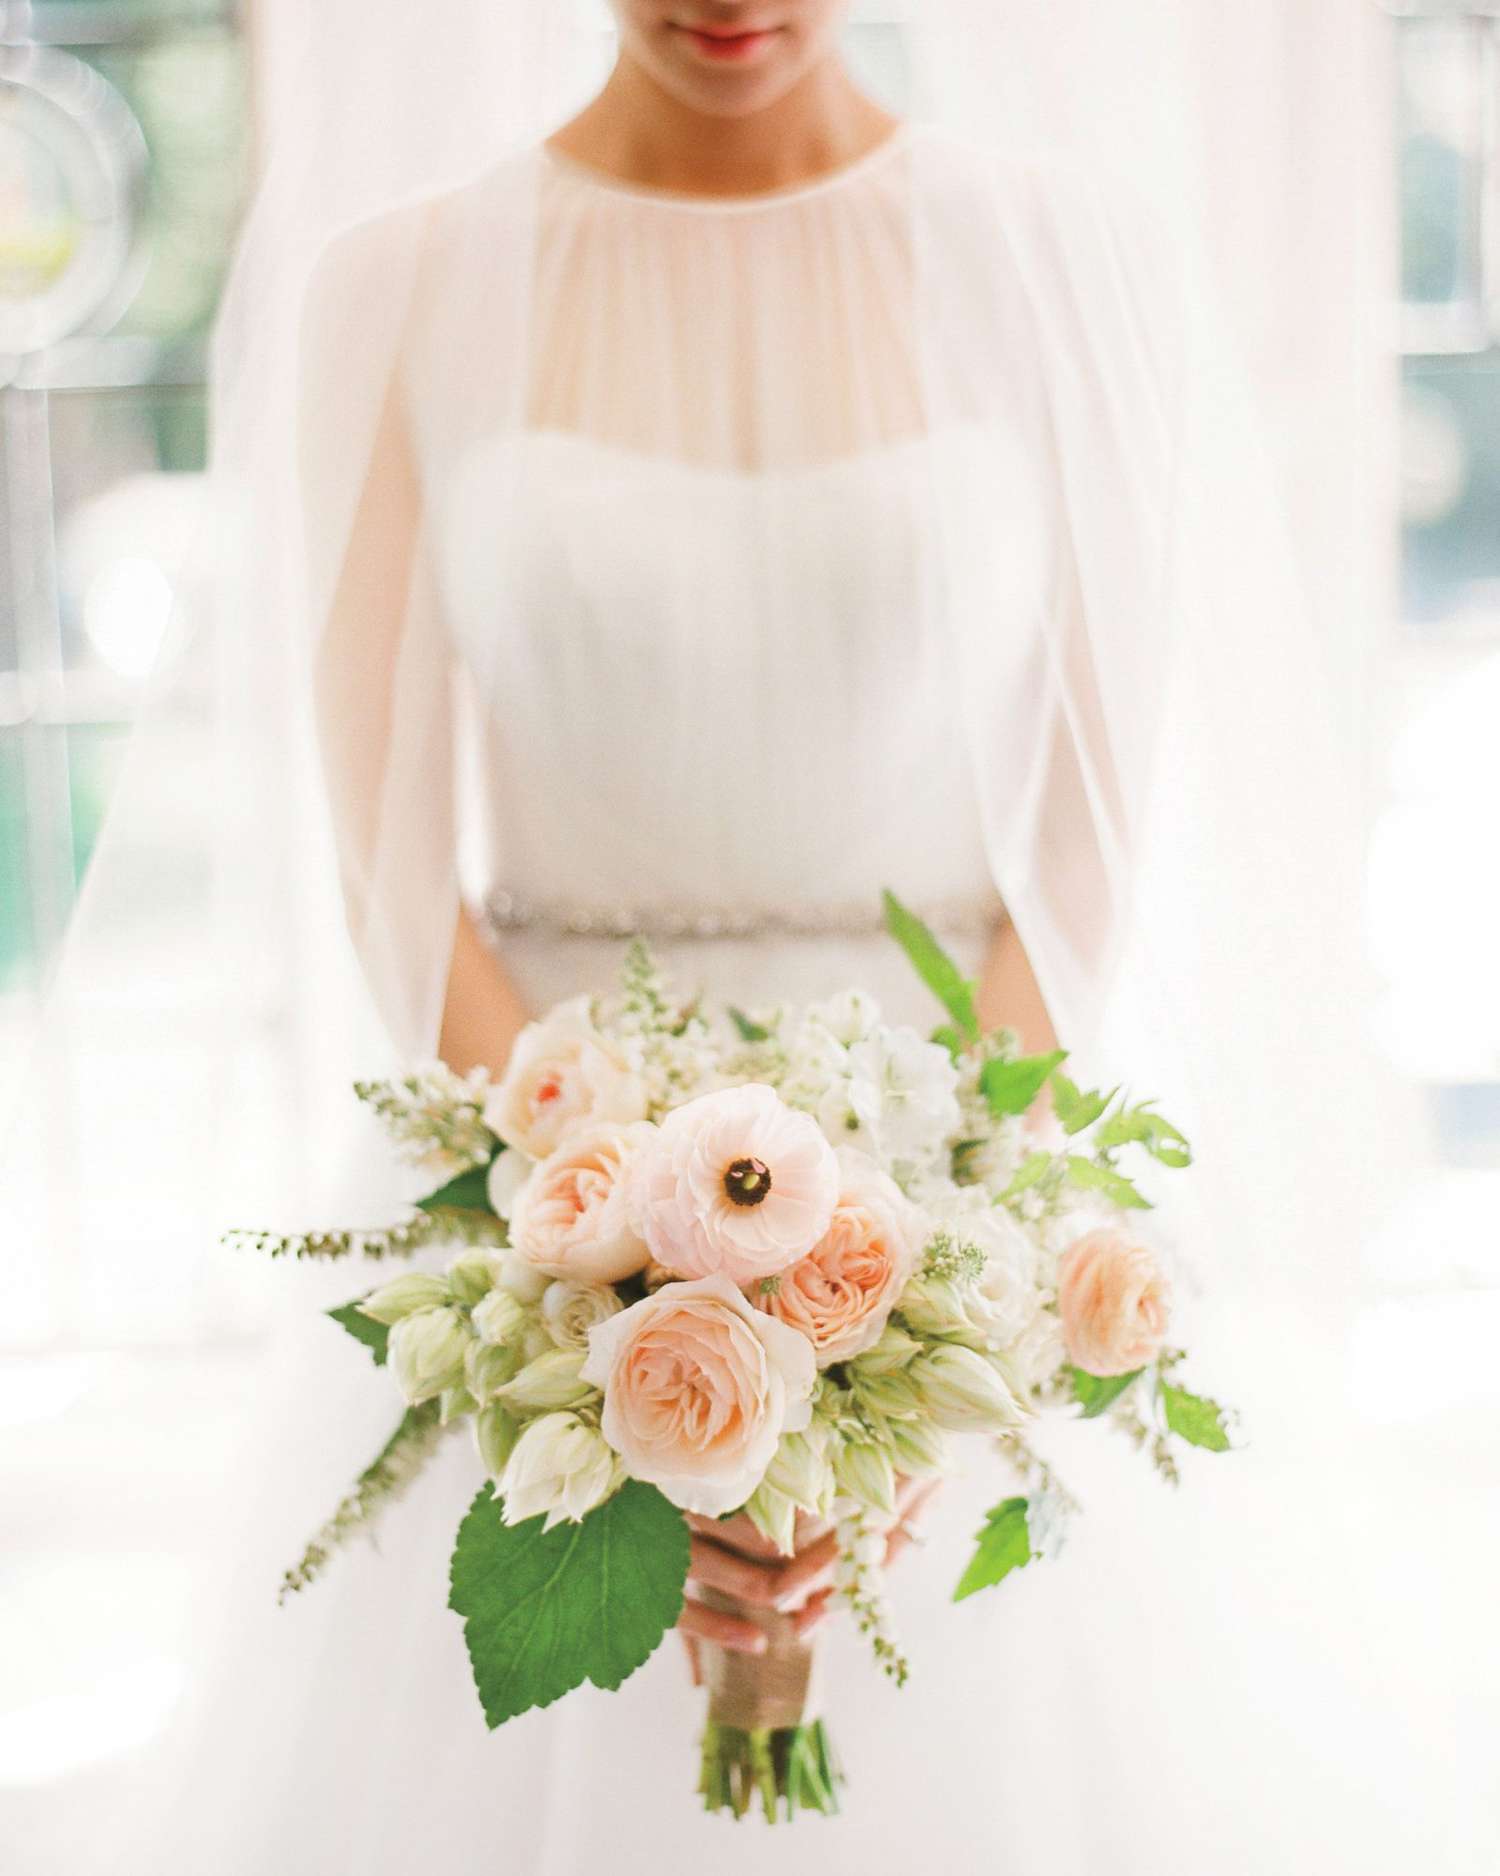 bride-bouquet-2013-08-31-bomibilly-0114-mwds110832.jpg